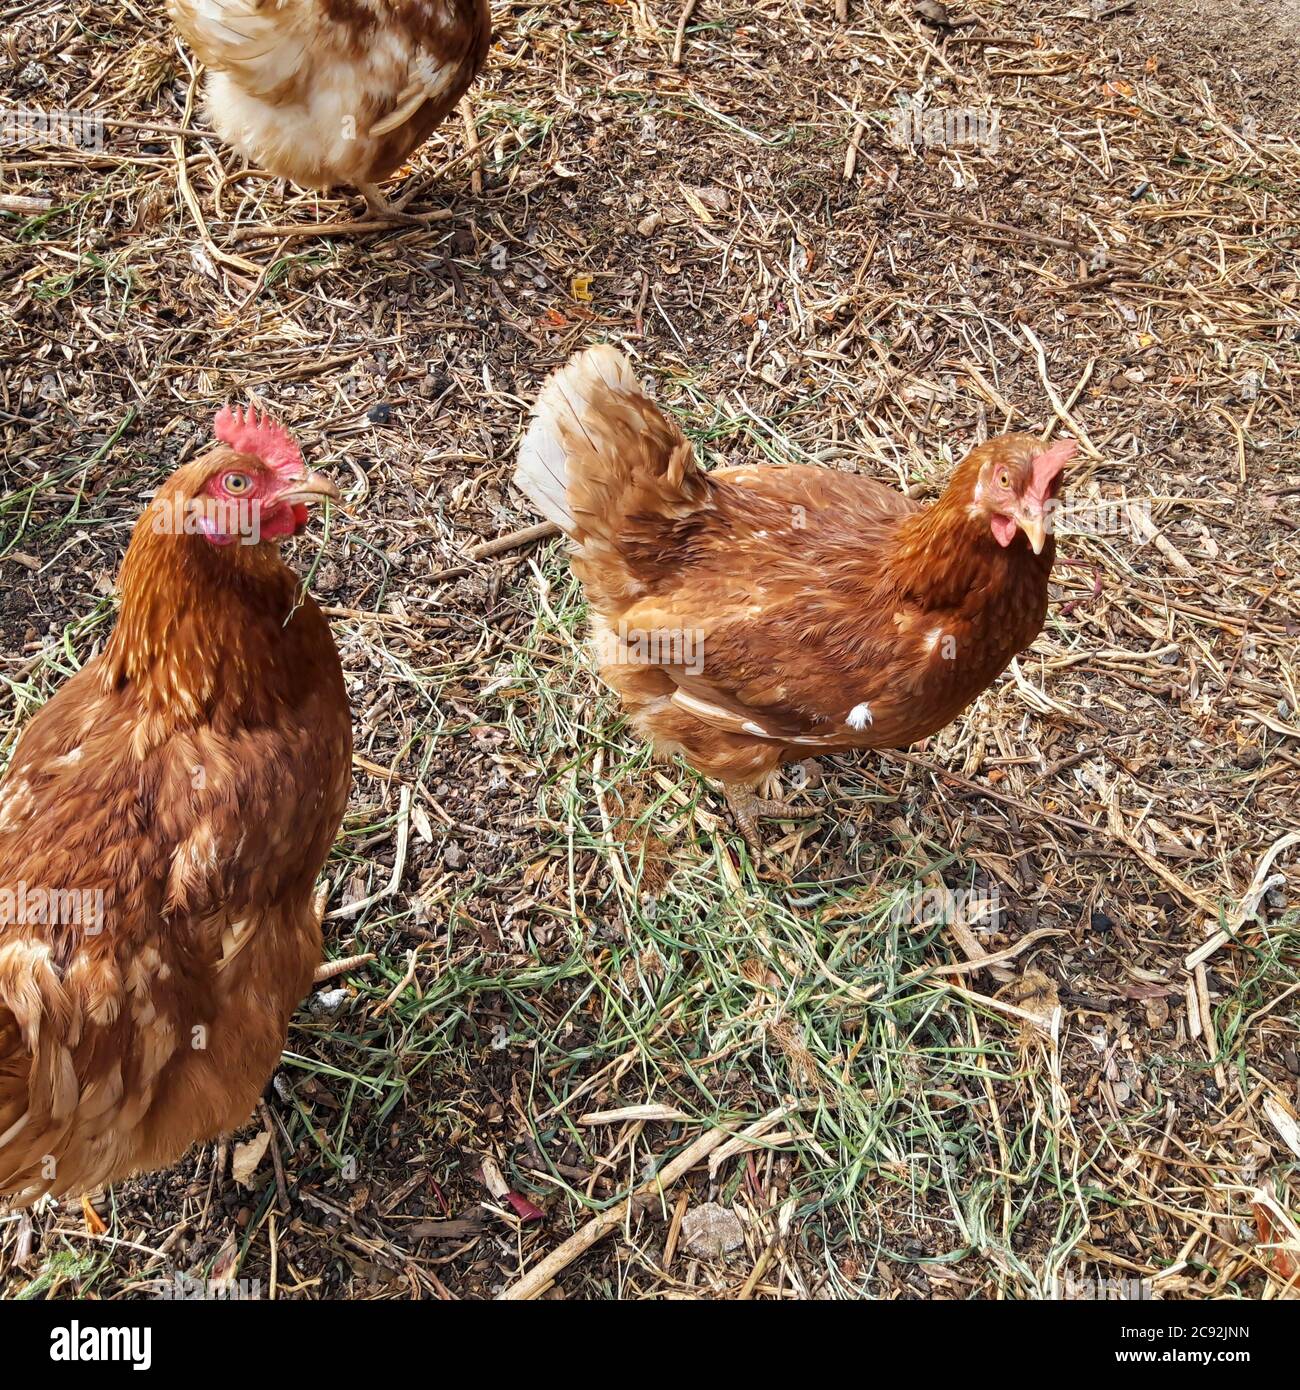 Granja de pollo orgánica de gama libre Foto de stock